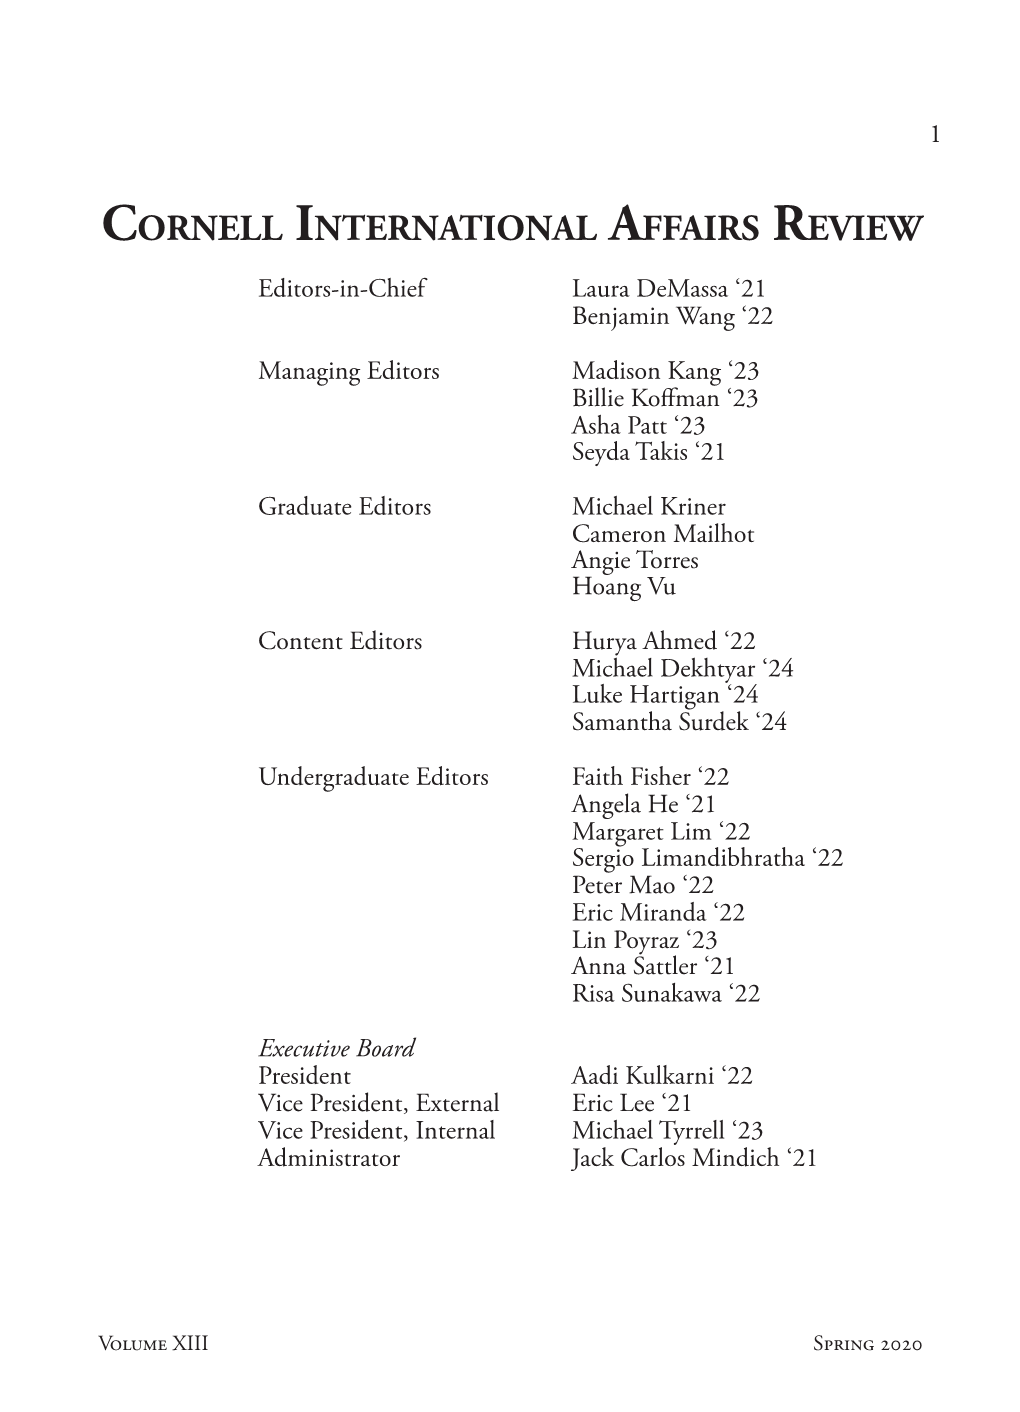 Cornell International Affairs Review 14.1